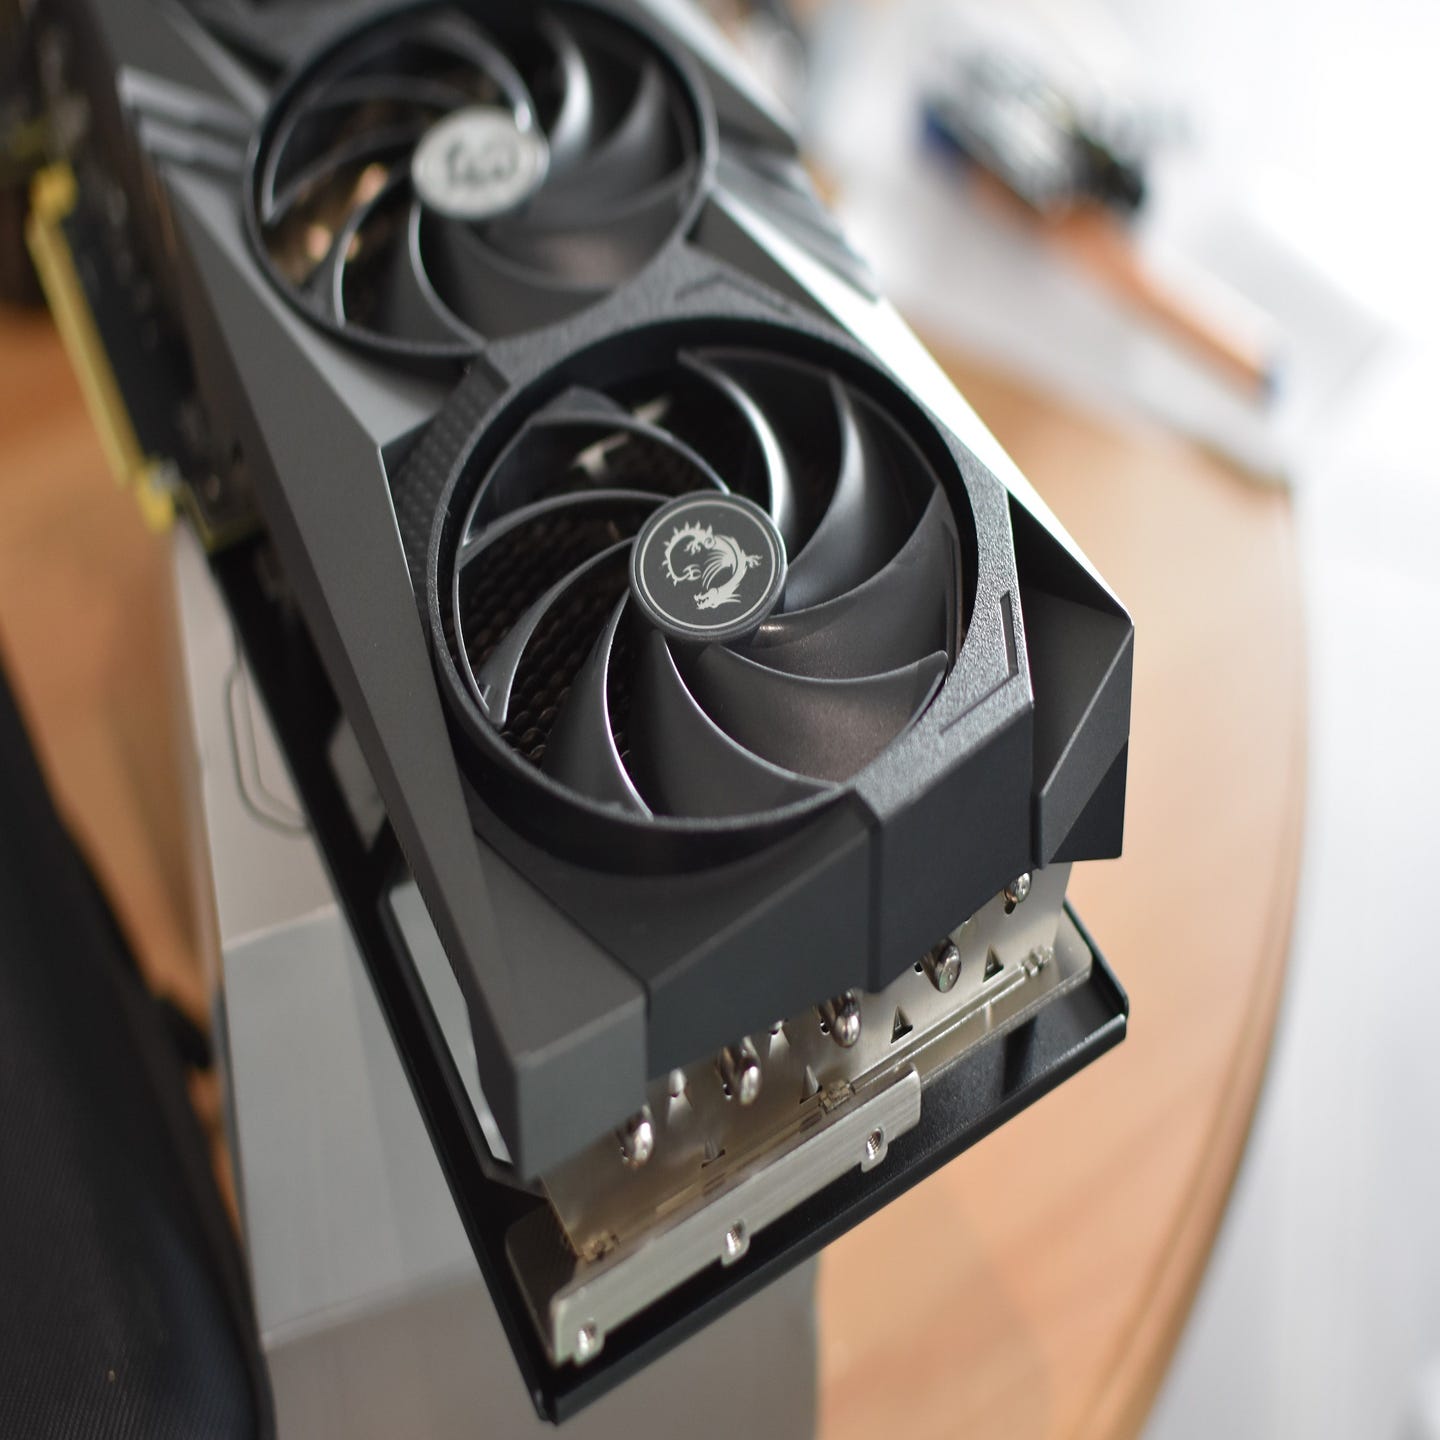 Nvidia RTX 4060 Ti vs RTX 3060 Ti vs RTX 2060 Super: How do the mid-range  60-class GPUs stack up